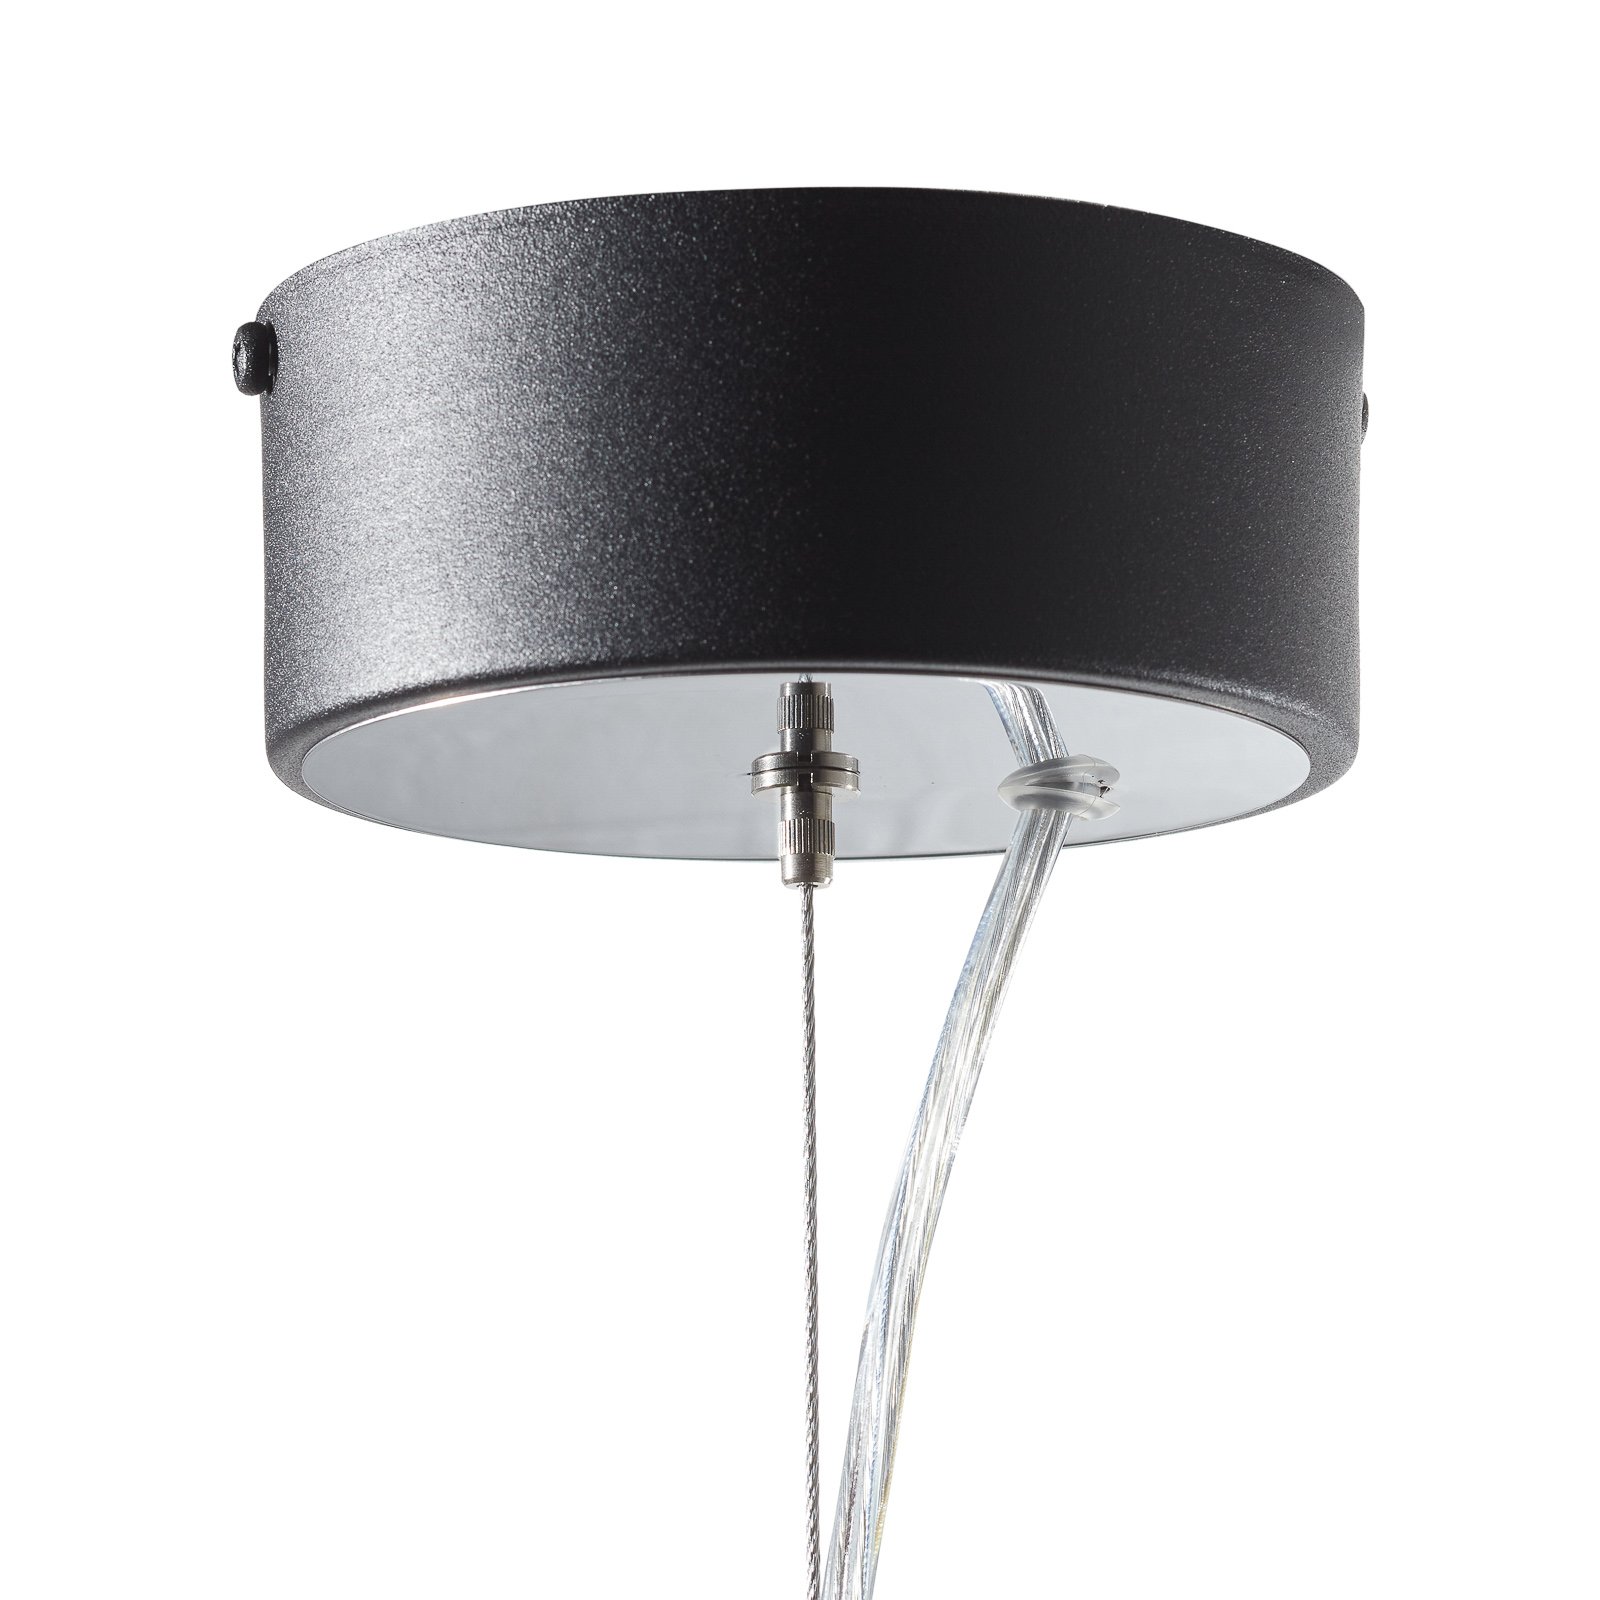 Lampa wisząca Vento, czarna, Ø 60 cm, metal, E27